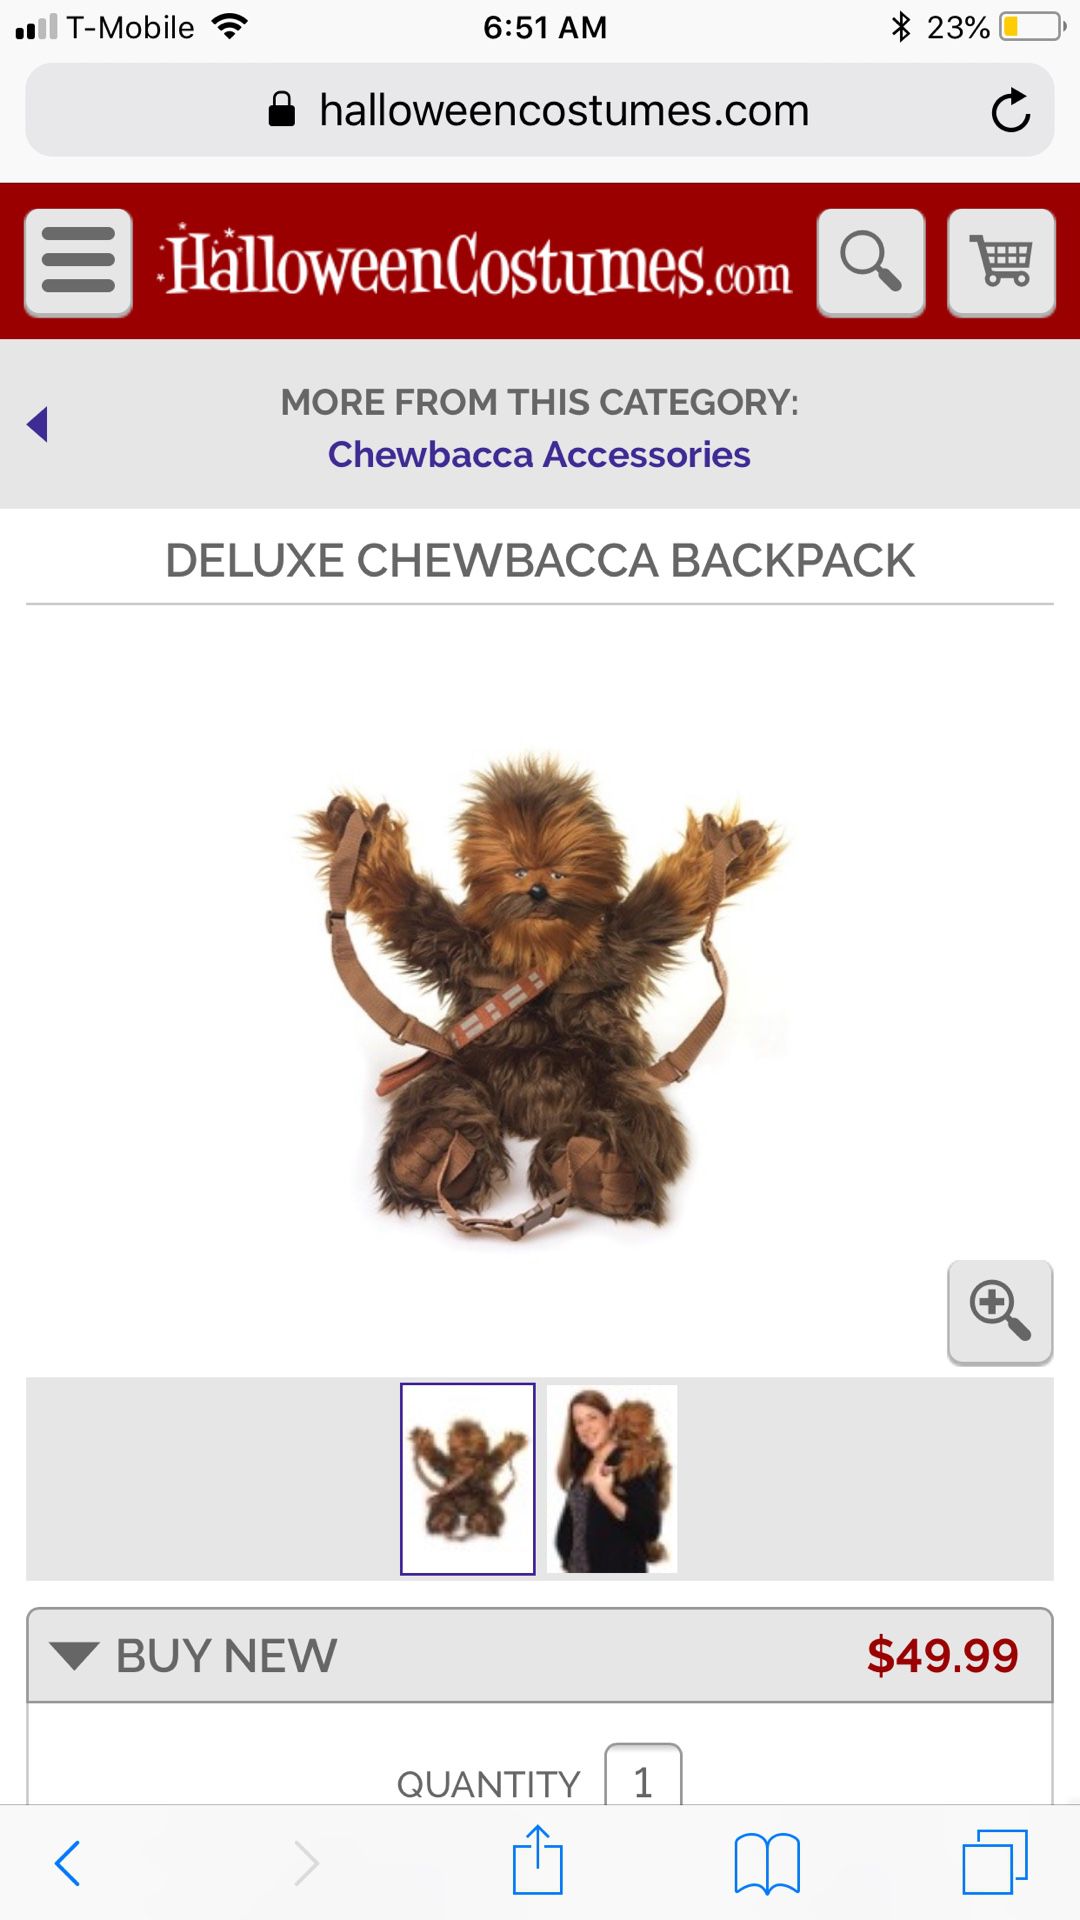 Star Wars Chewbacca Bookbag